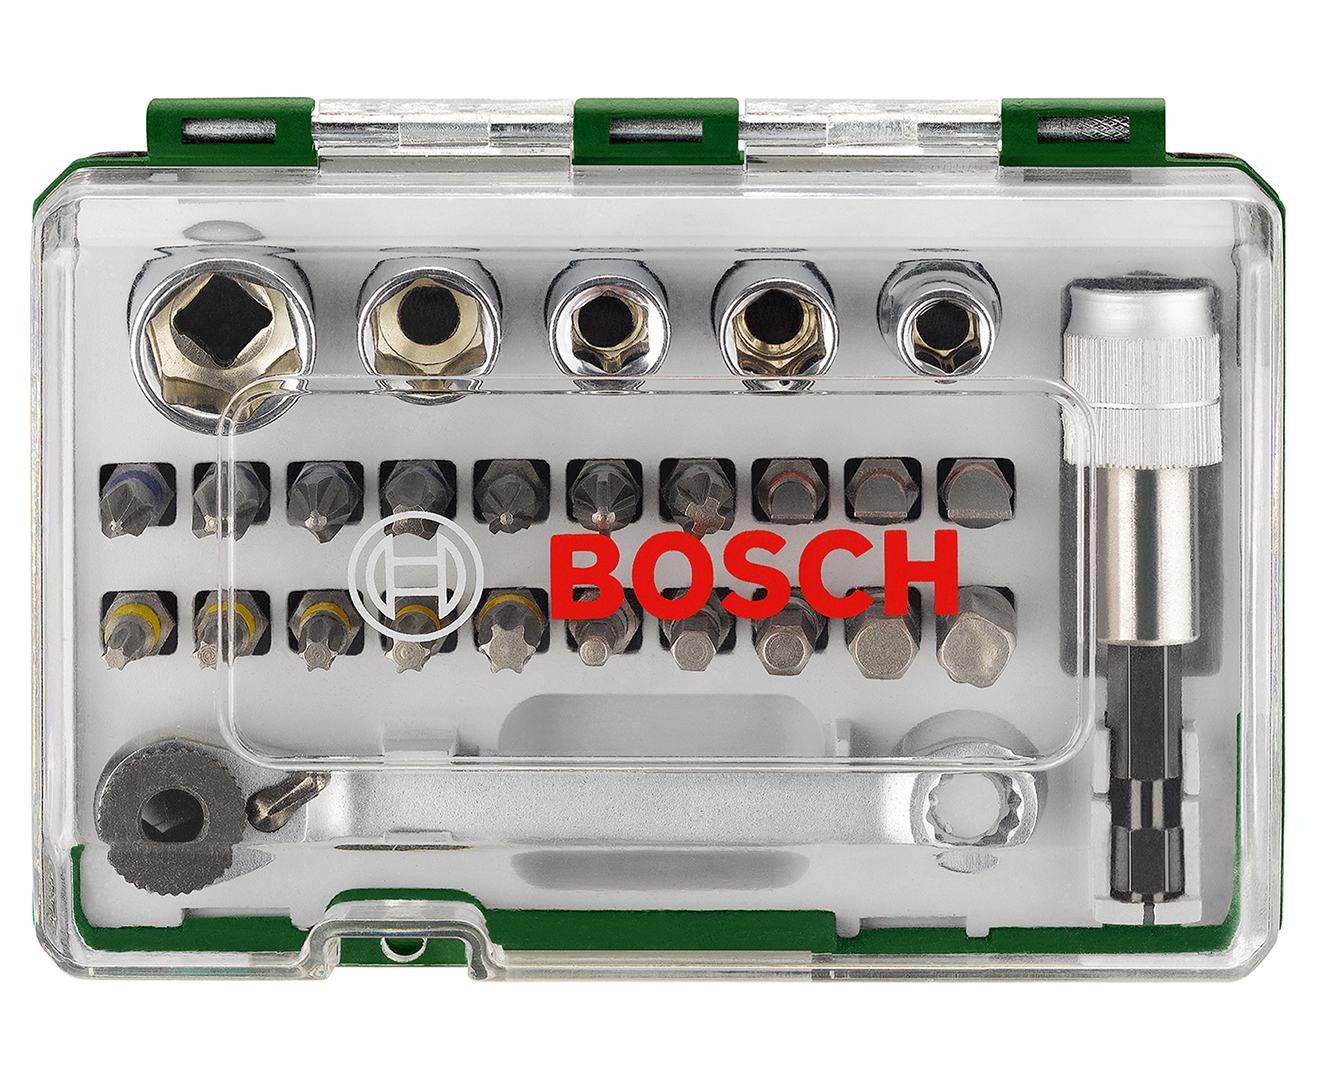 Bosch 27Piece Screwdriver Bit & Ratchet Set w/ Colour